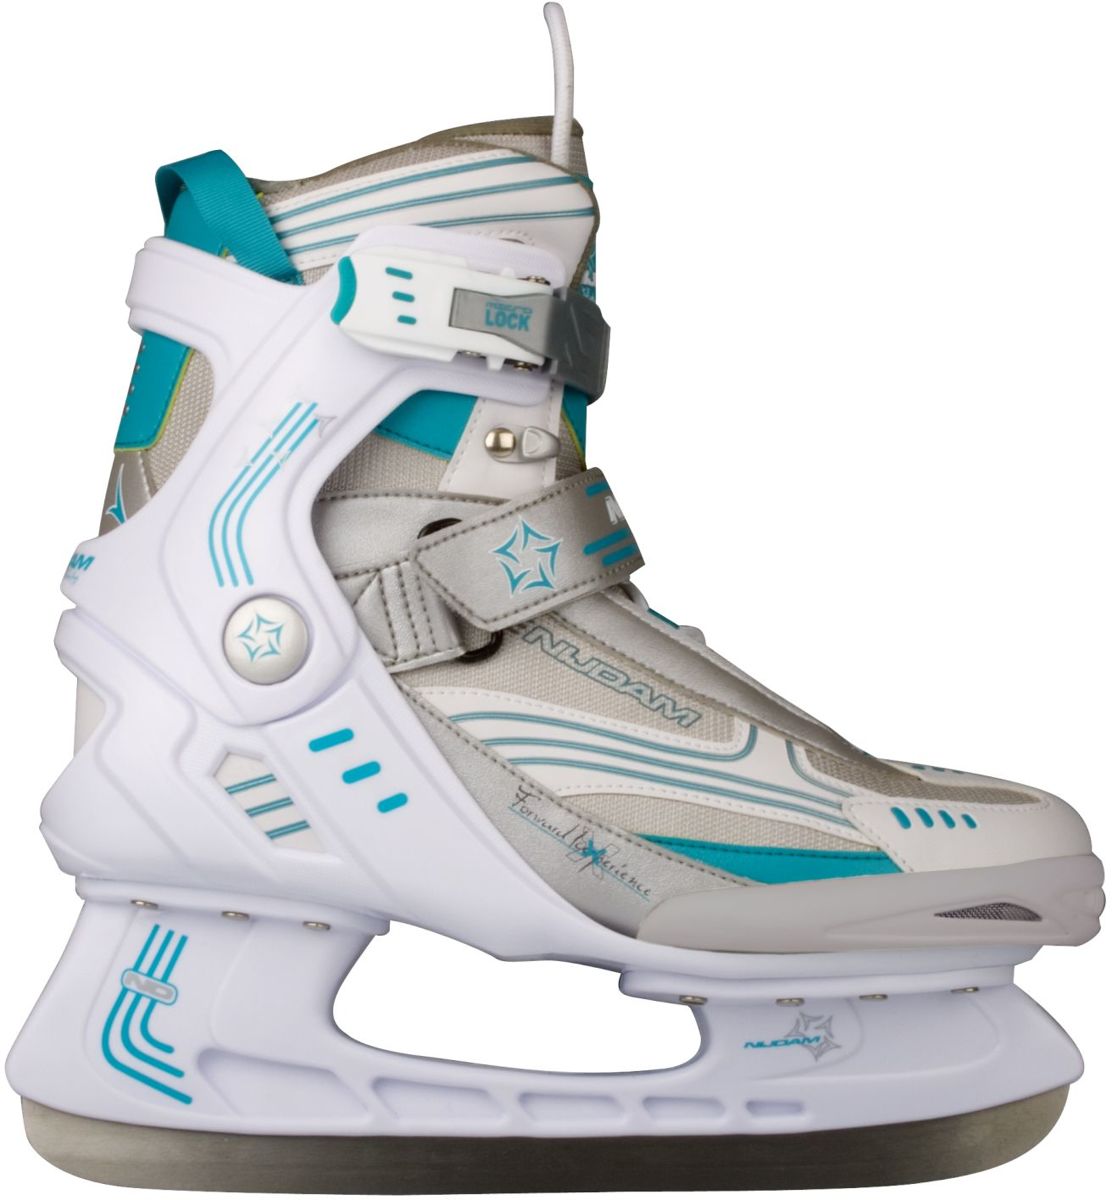 Nijdam 3353 Ijshockeyschaats - Semi-Softboot - Wit/Turquoise - Maat 36